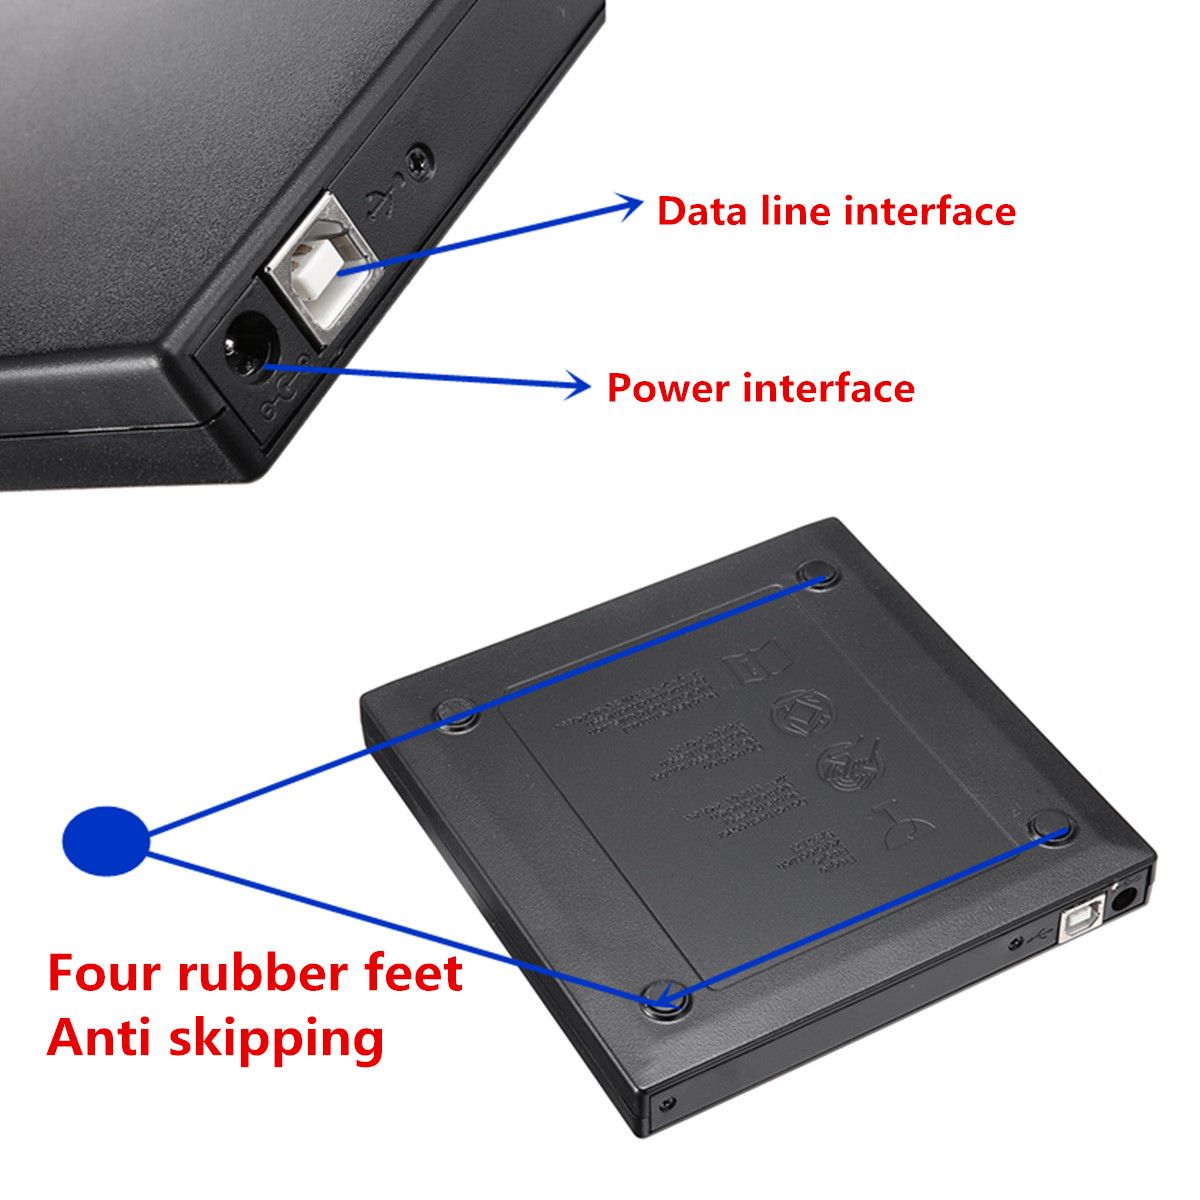 USB-20-External-CD-Burner-CDDVD-Player-Optical-Drive-for-PC-Laptop-Windows-1284112